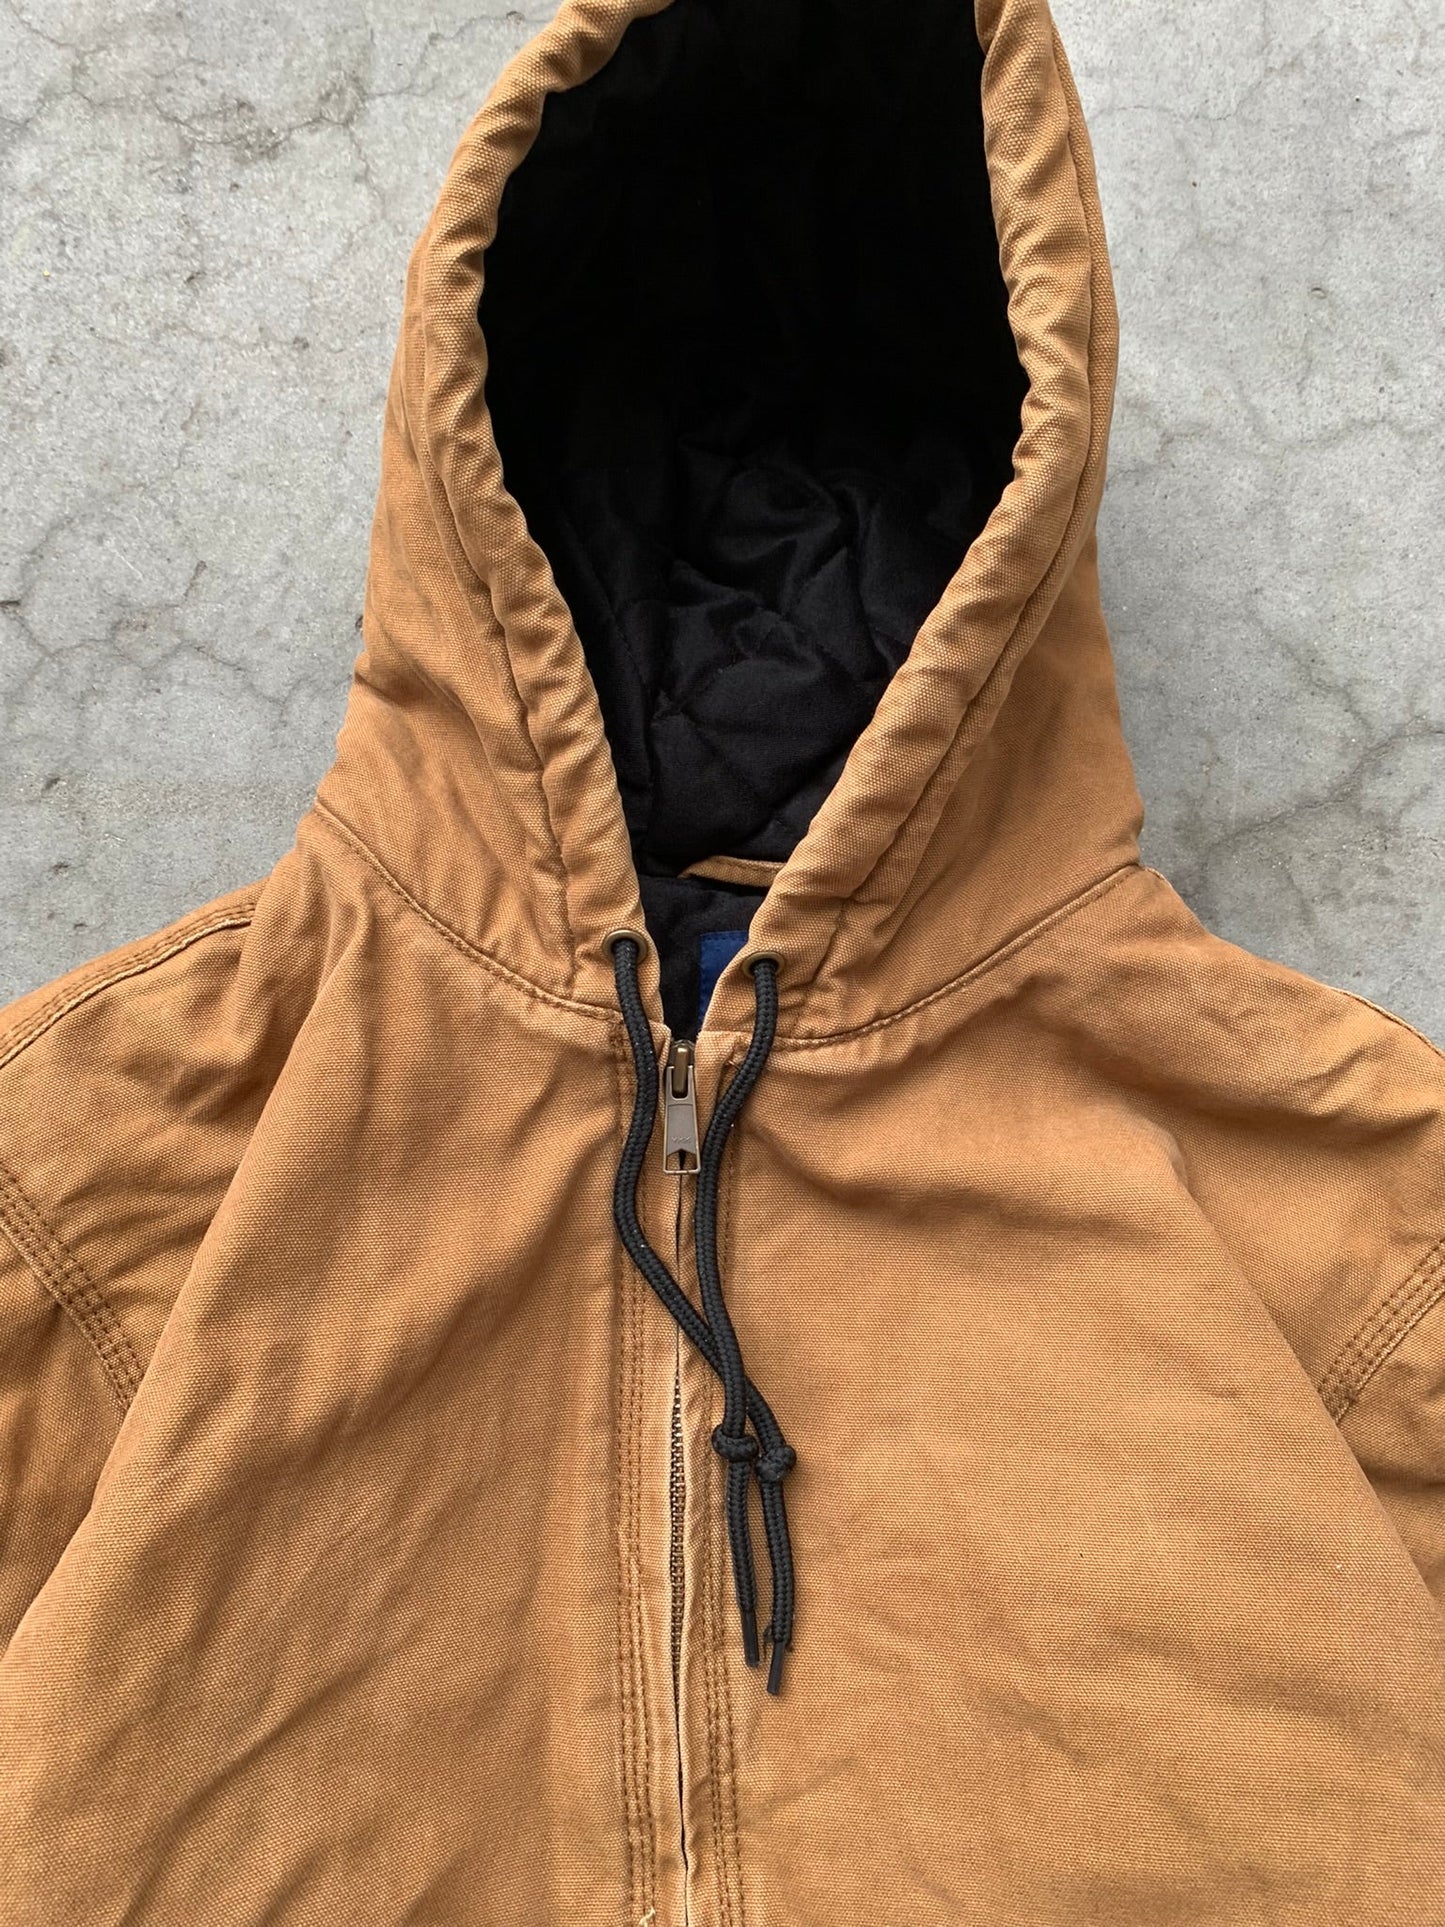 (L) Vintage Hooded Workwear Jacket